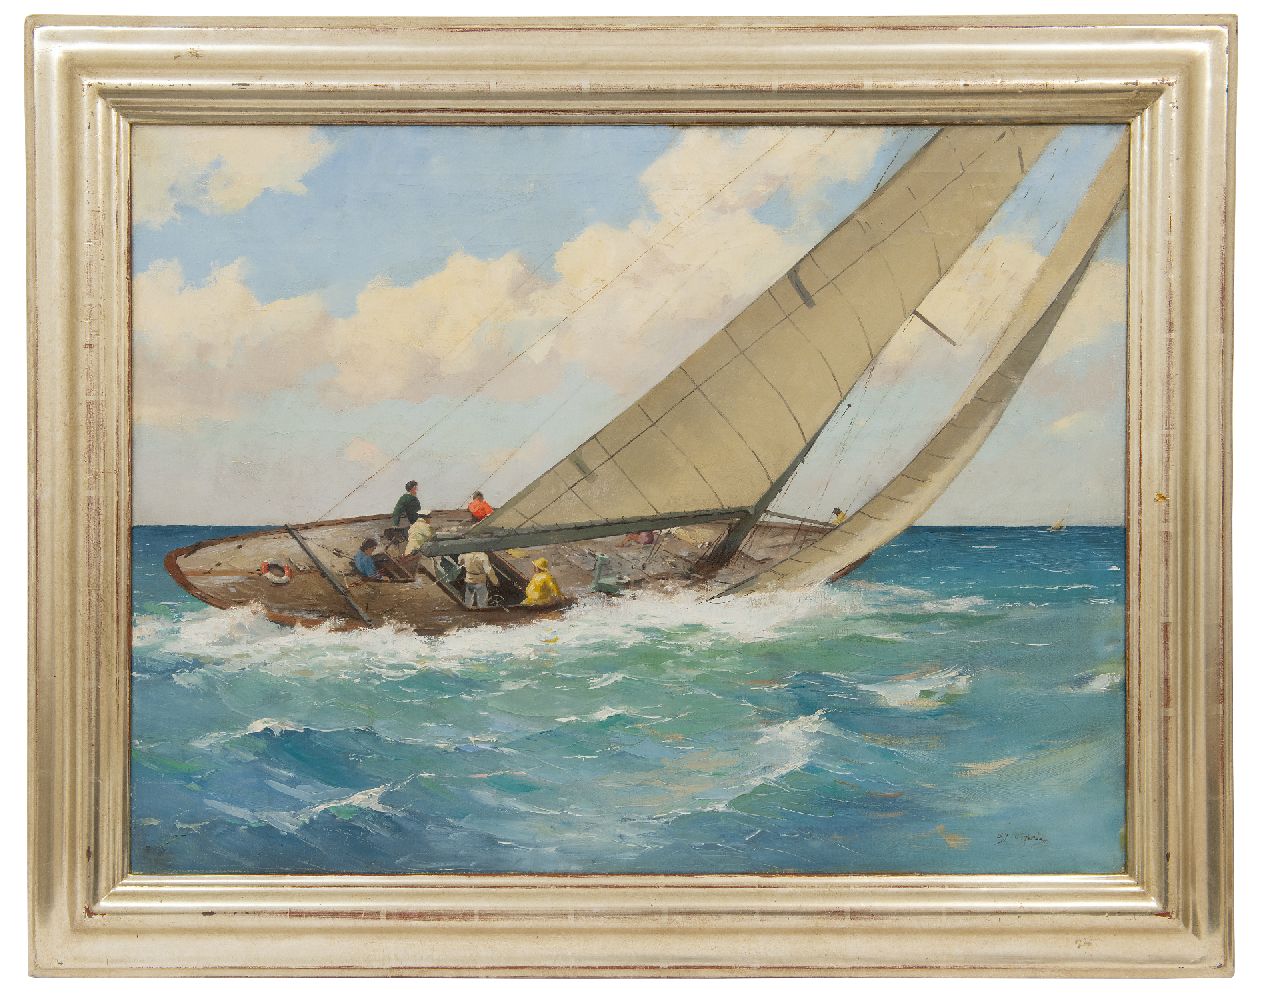 Ligtelijn E.J.  | Evert Jan Ligtelijn, Sailing yacht in a regatta, oil on canvas 60.2 x 79.6 cm, signed l.r.